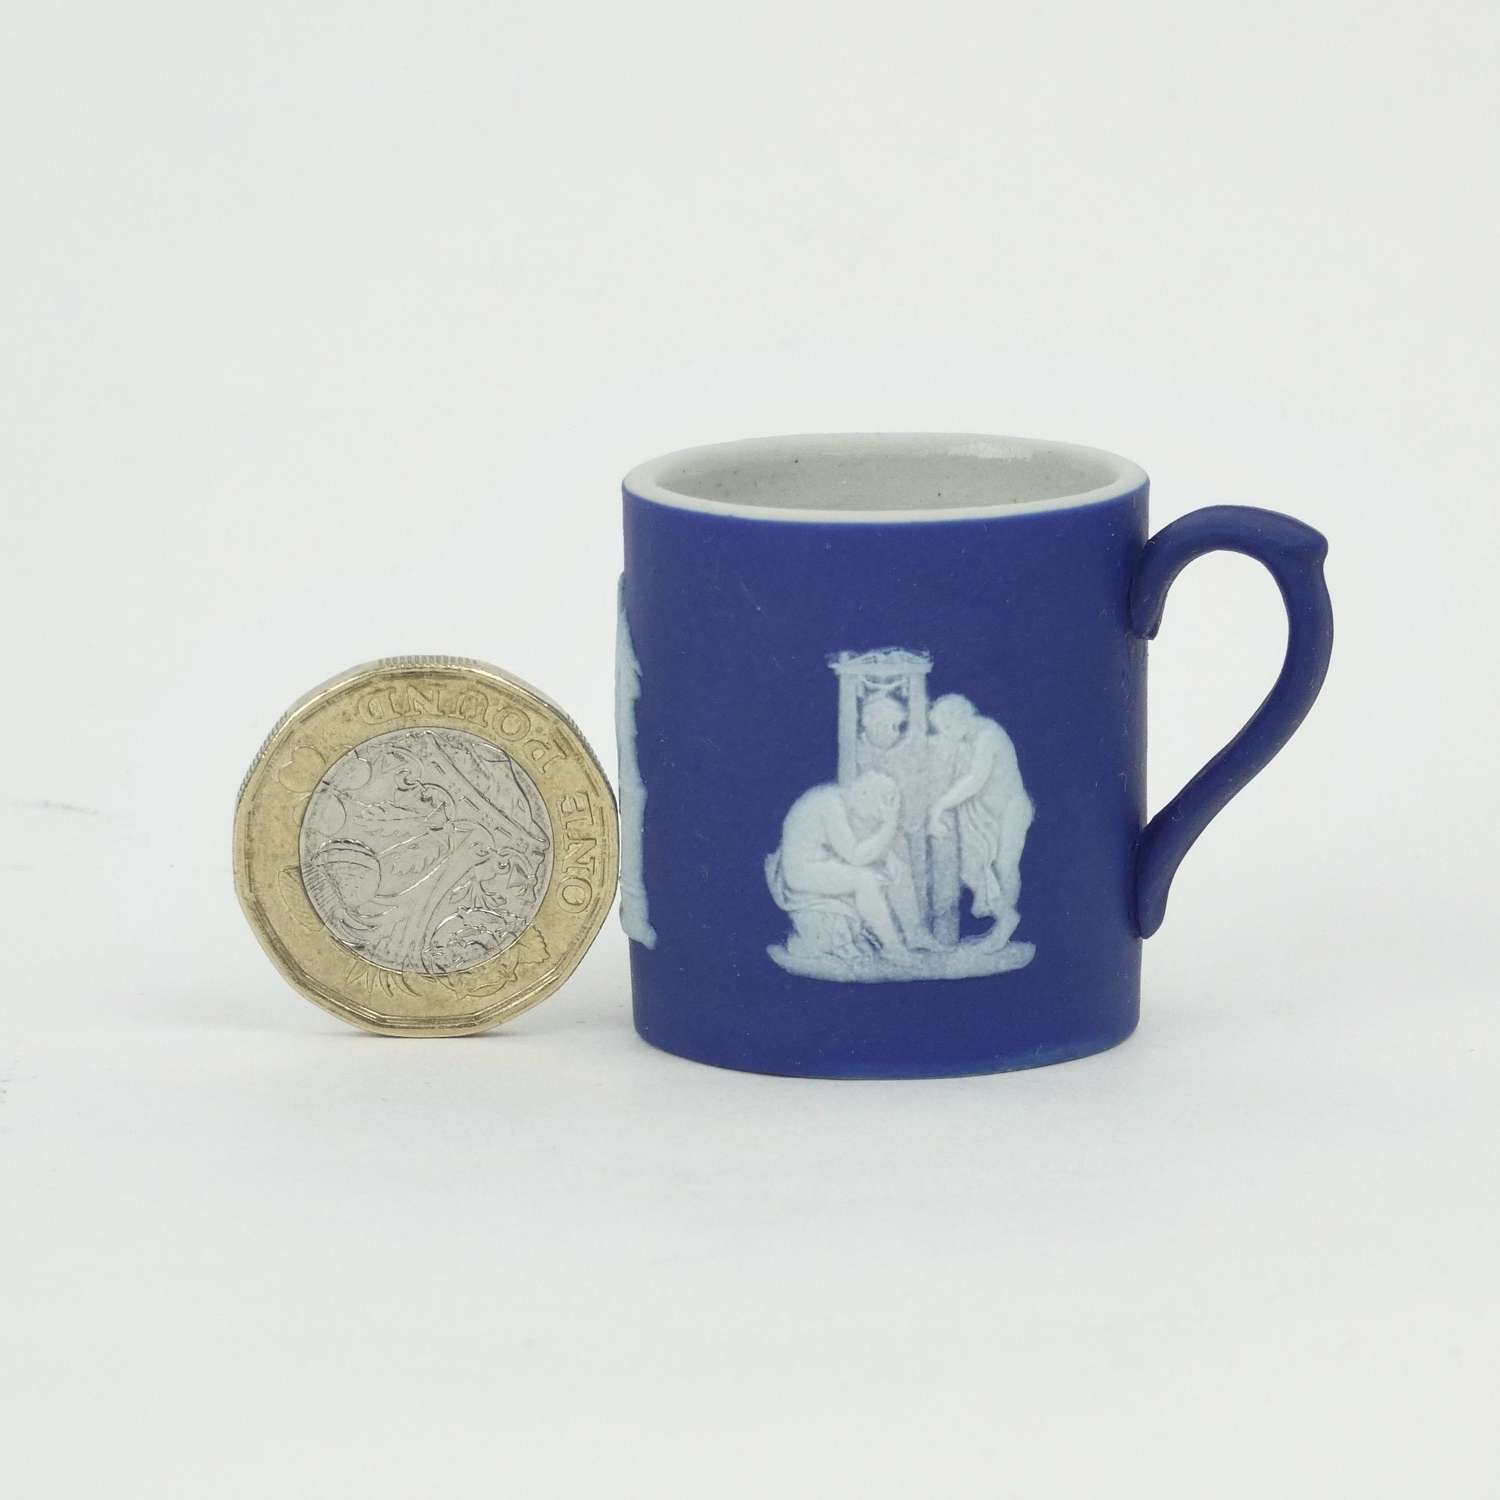 Miniature Wedgwood mug